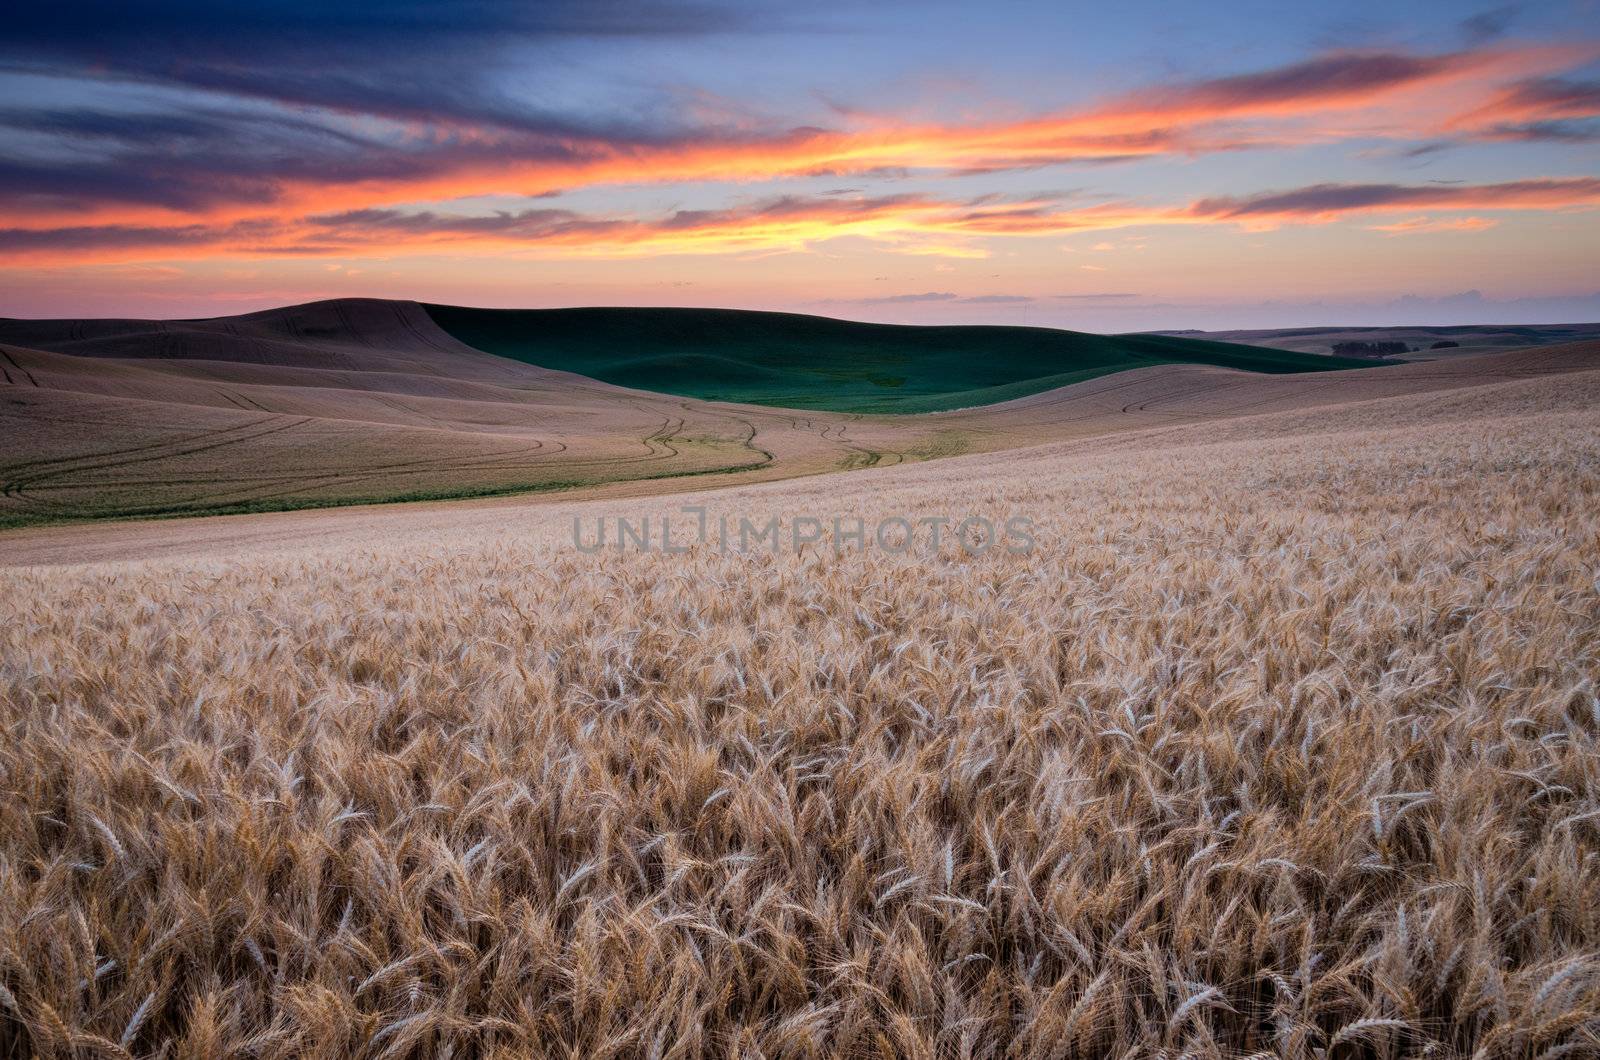 Ripe wheat fields at sunset in summer, Whitman County, Washington, USA by CharlesBolin